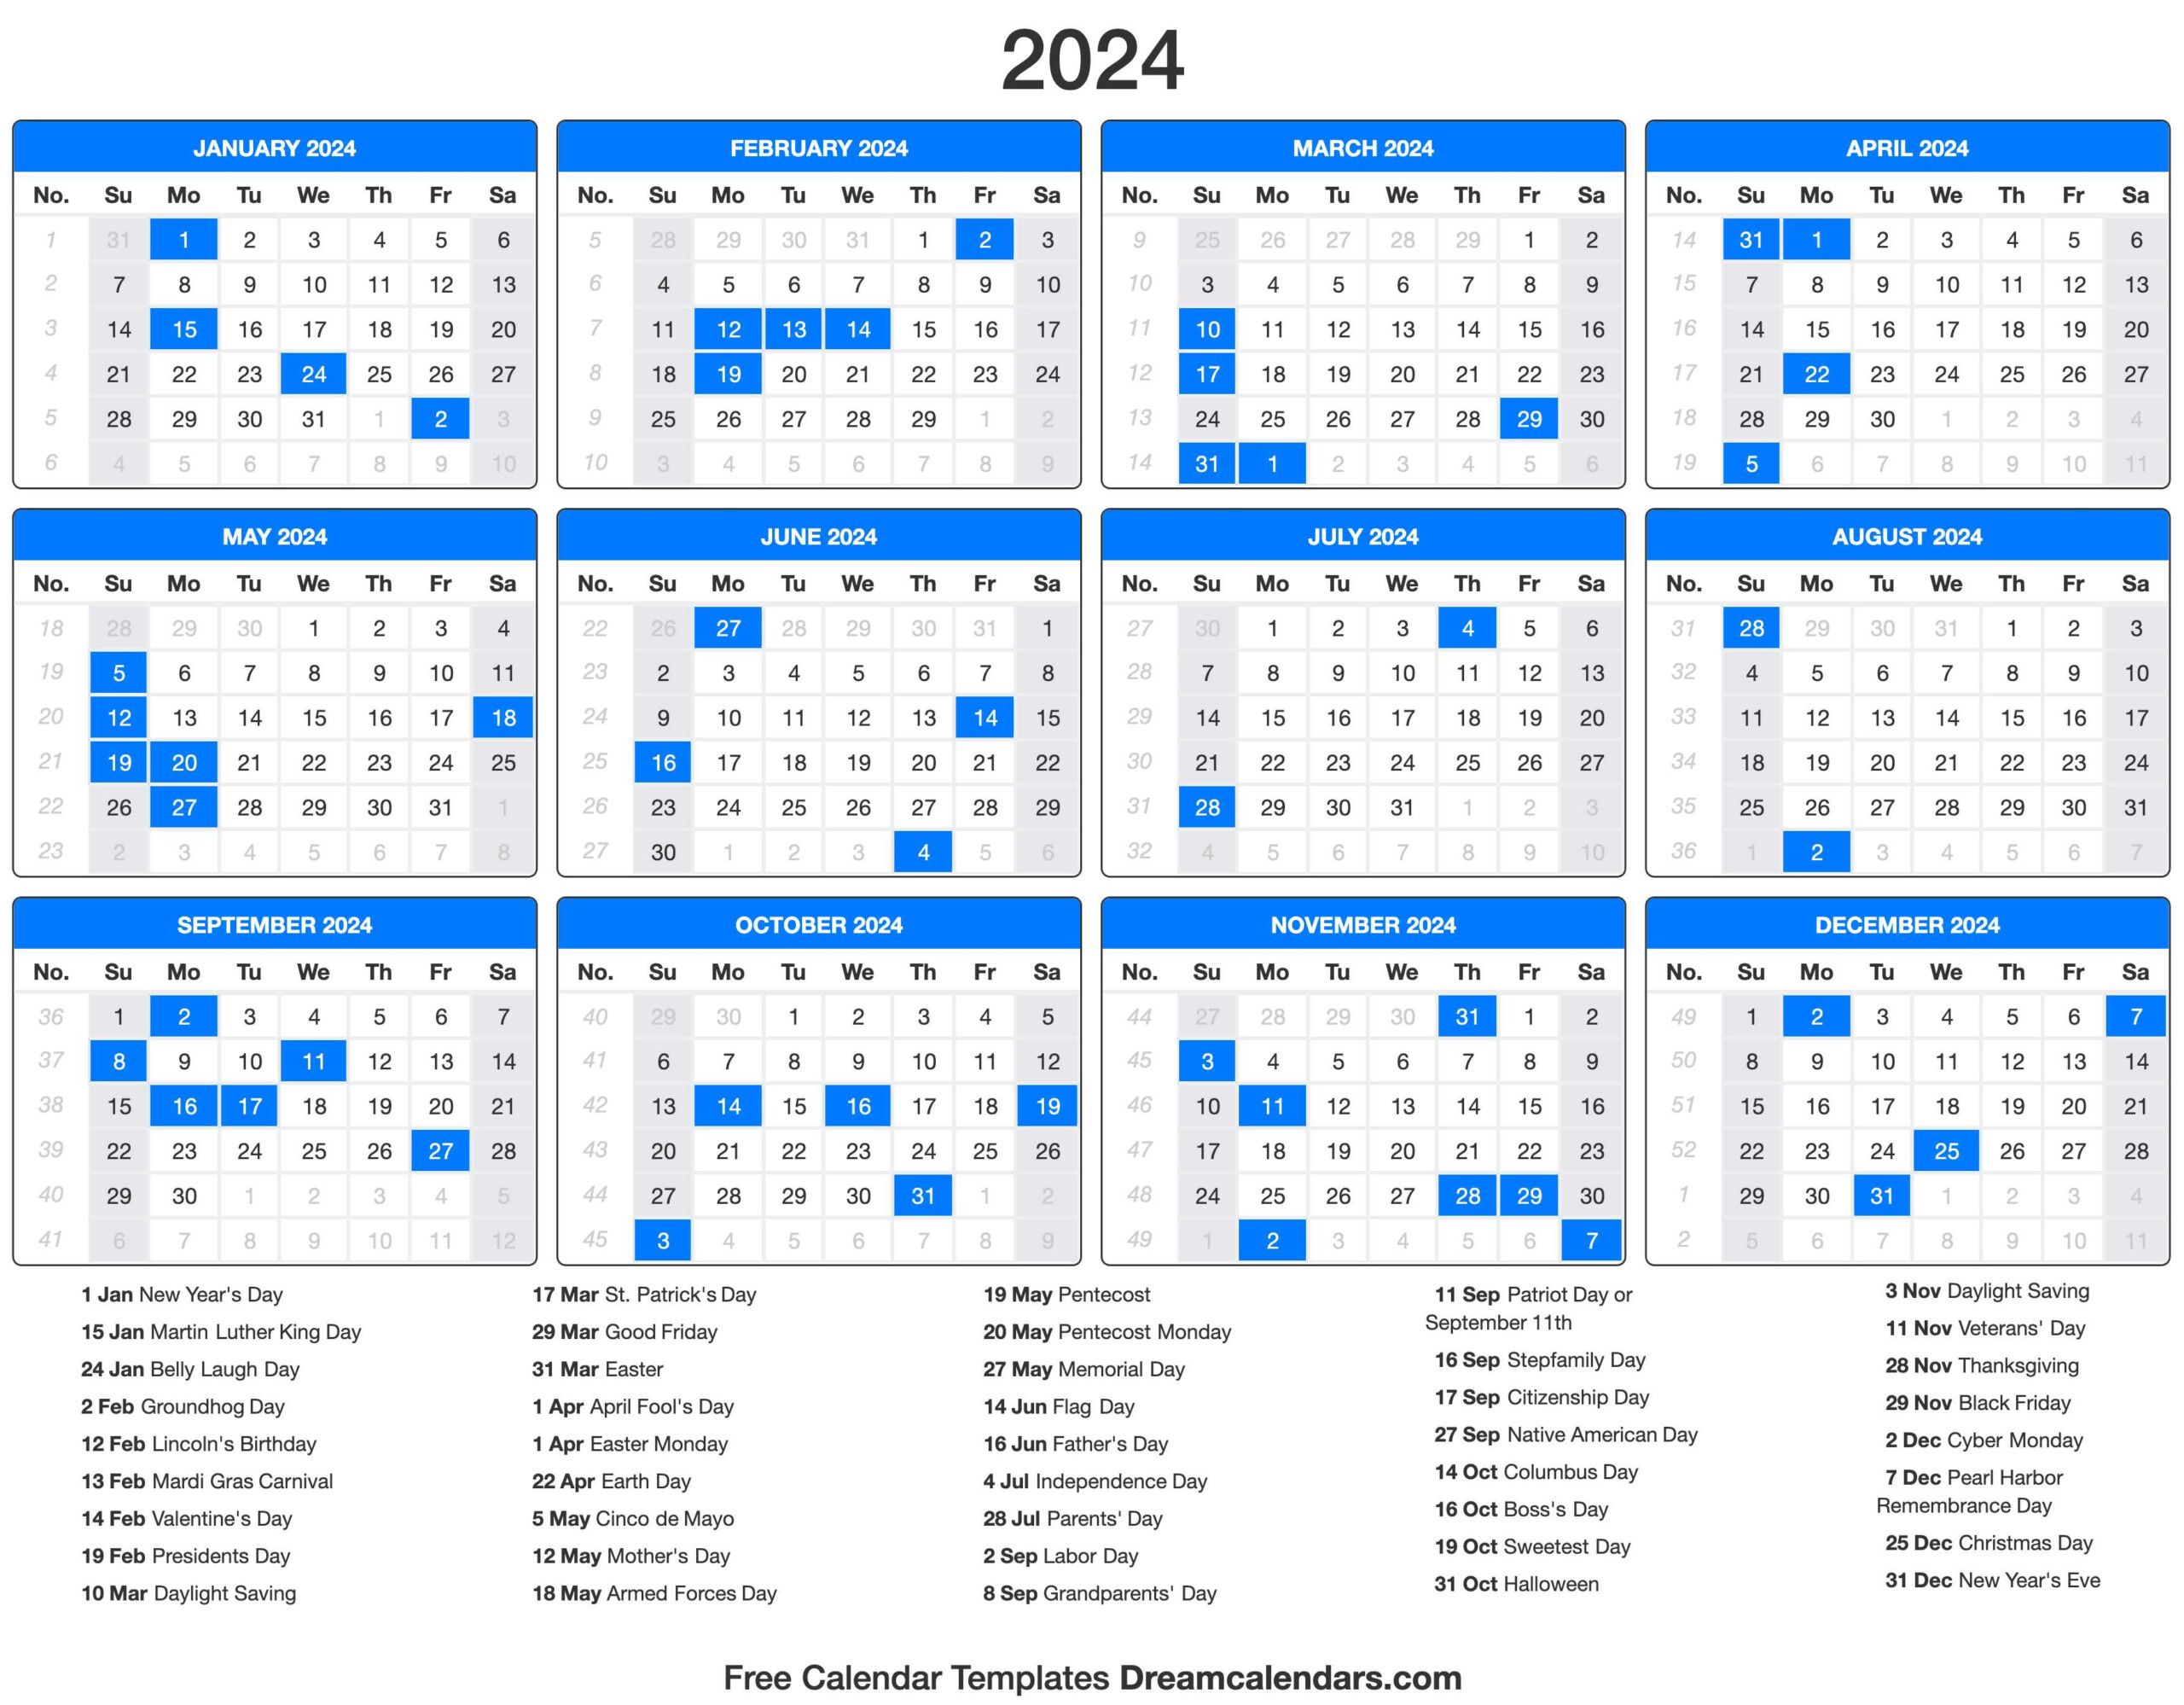 Phoenix Events Calendar April 2024 Prudy Kimberley